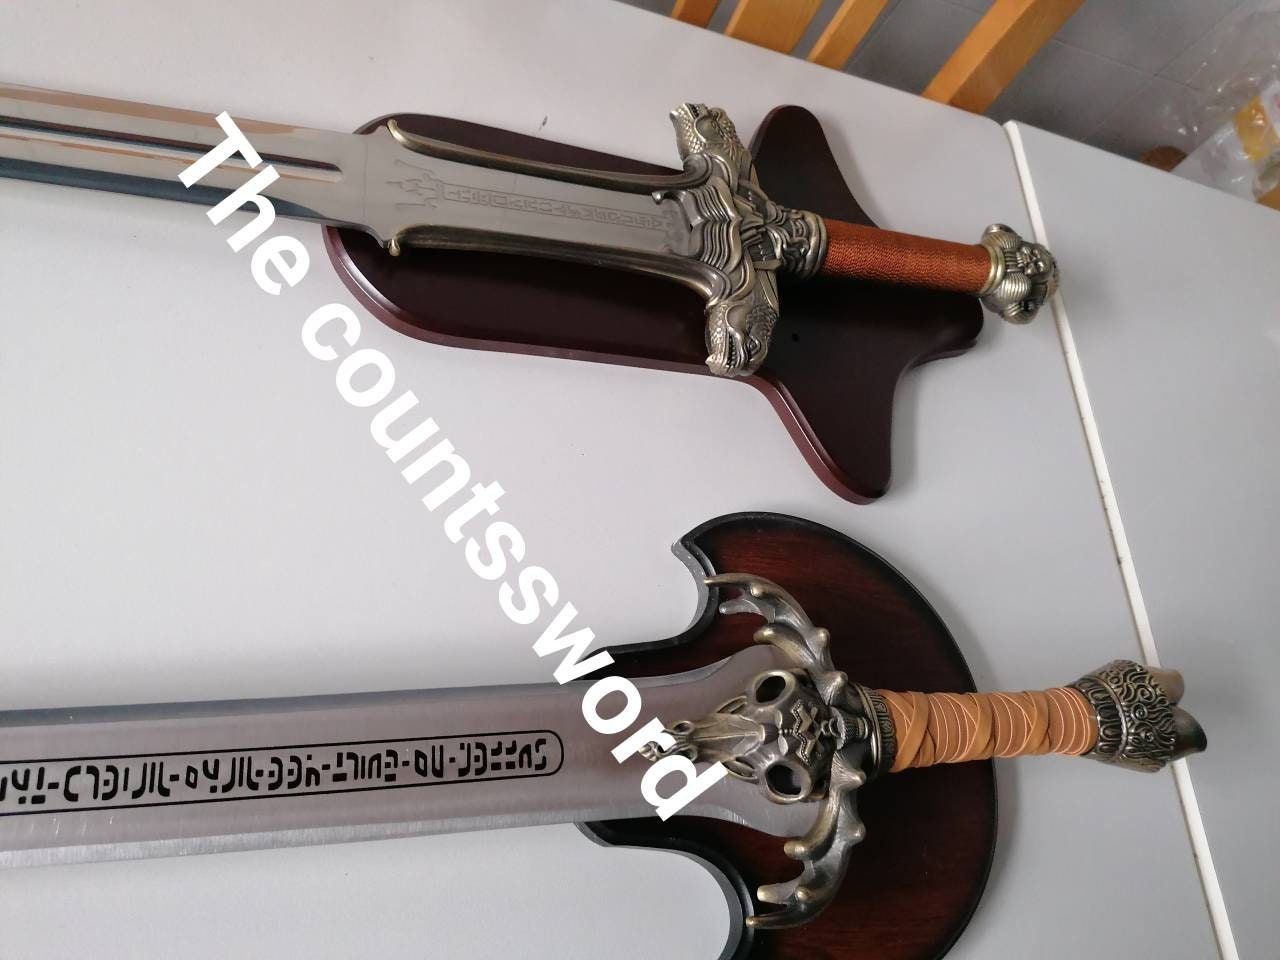 Buy Mihawk Yoru Sword (Wide Blade), CAESARS Singapore